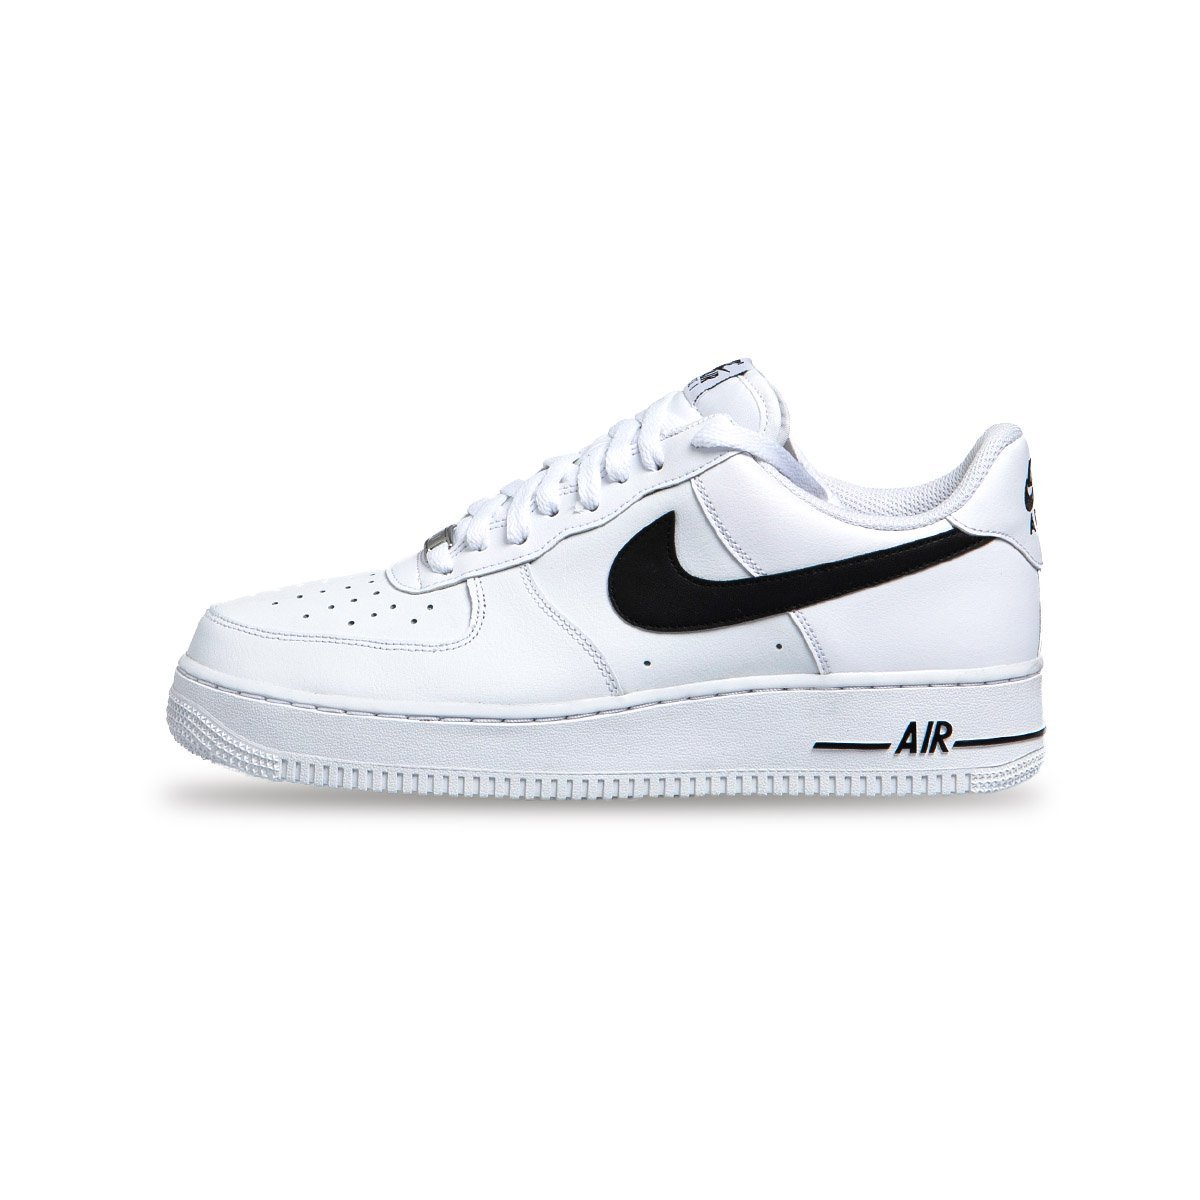 Sneakers Nike Air Force 1 '07 AN20 white/black (CJ0952-100) | Bludshop.com